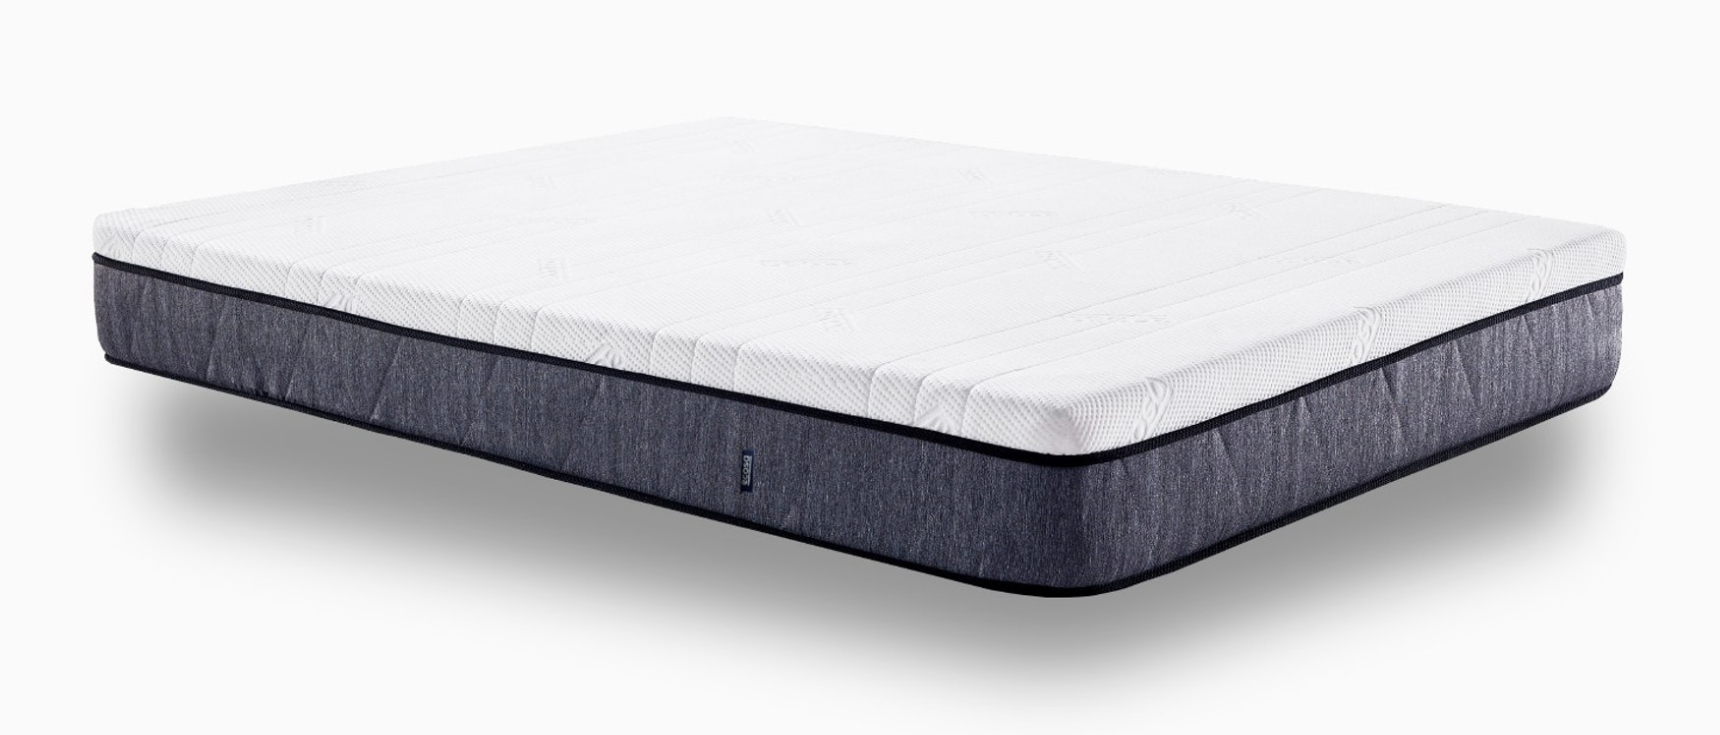 ecosa mattress review au